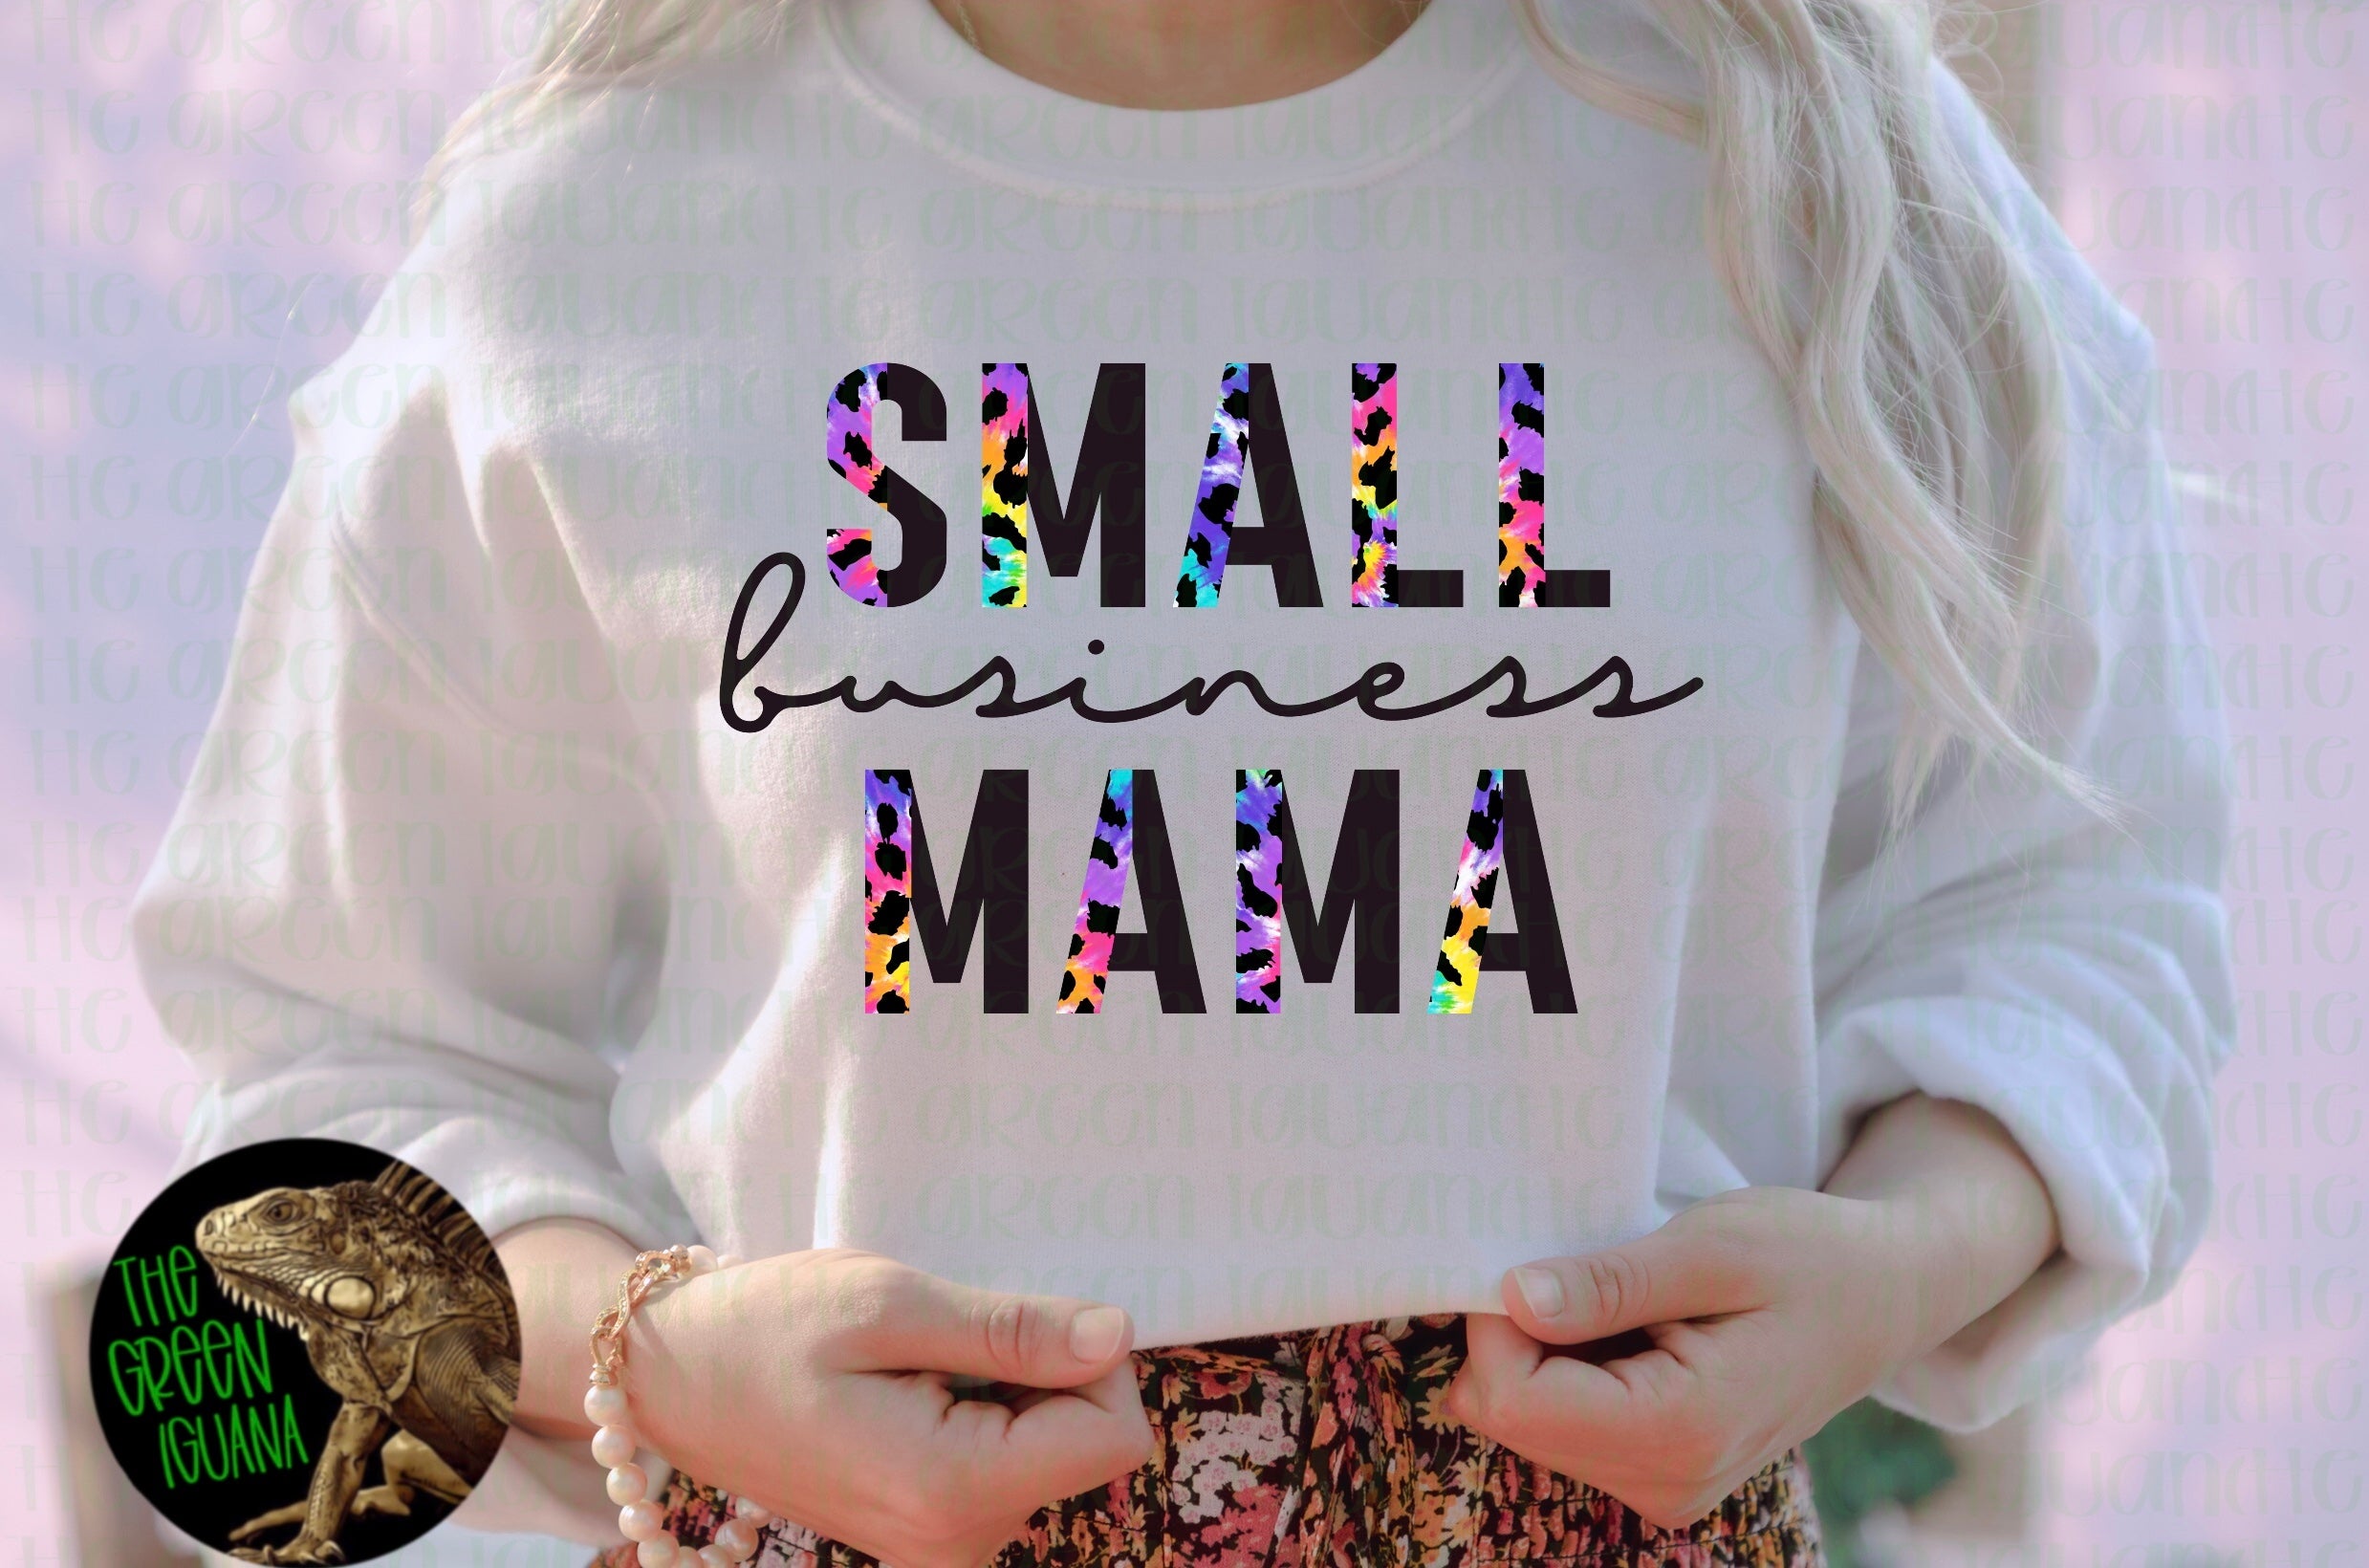 Small Business Mama